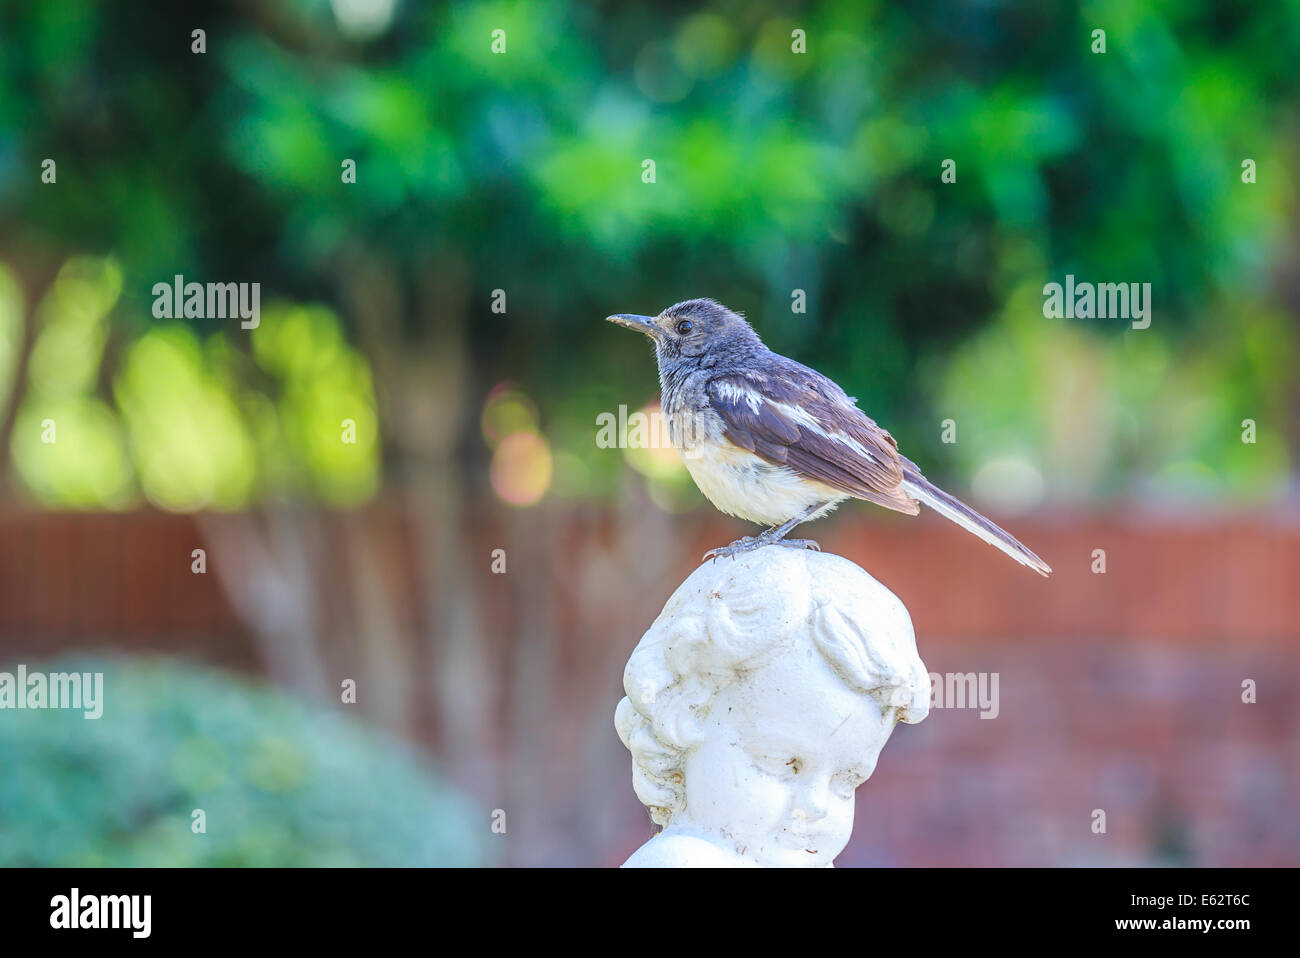 A bird, oriental magpie robin, on the statue in European style garden Stock Photo